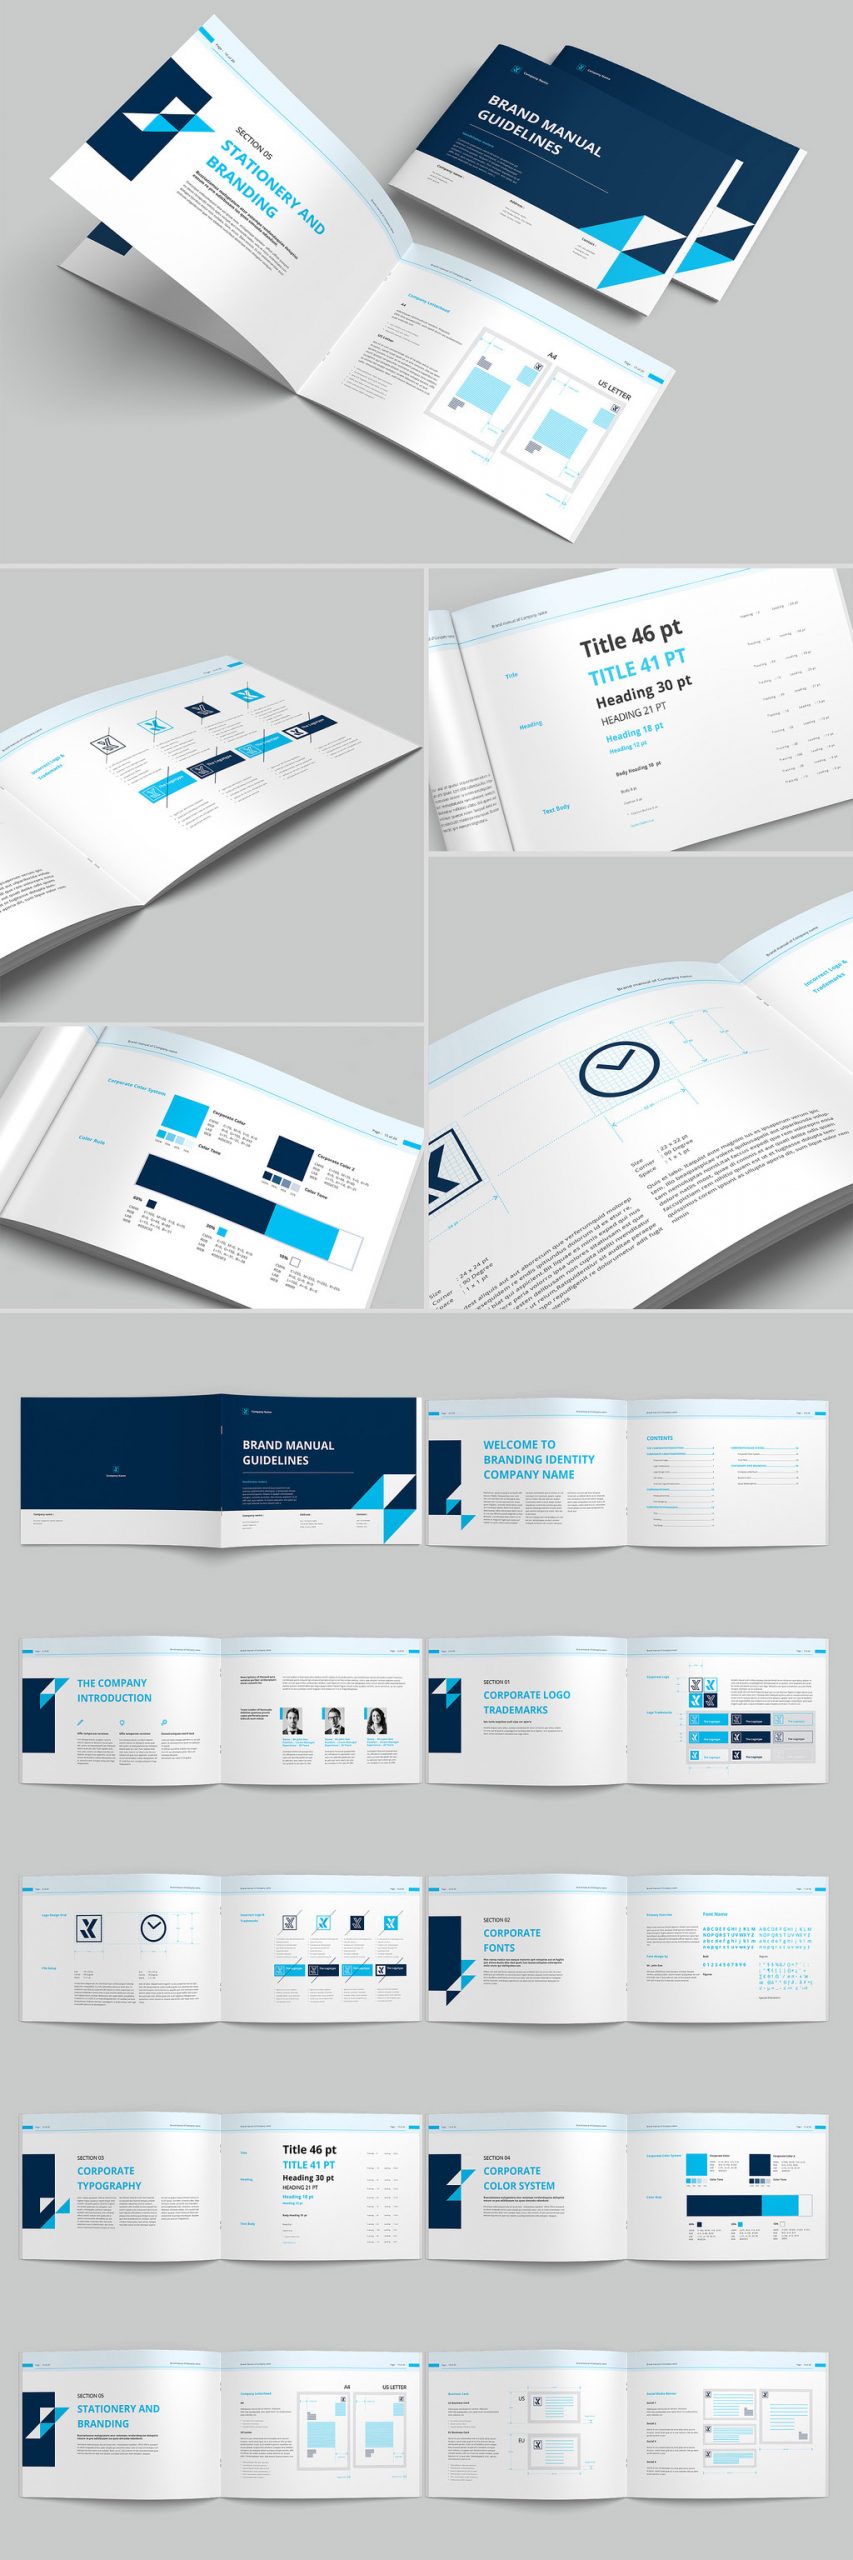 Adobe InDesign 品牌手册设计模板